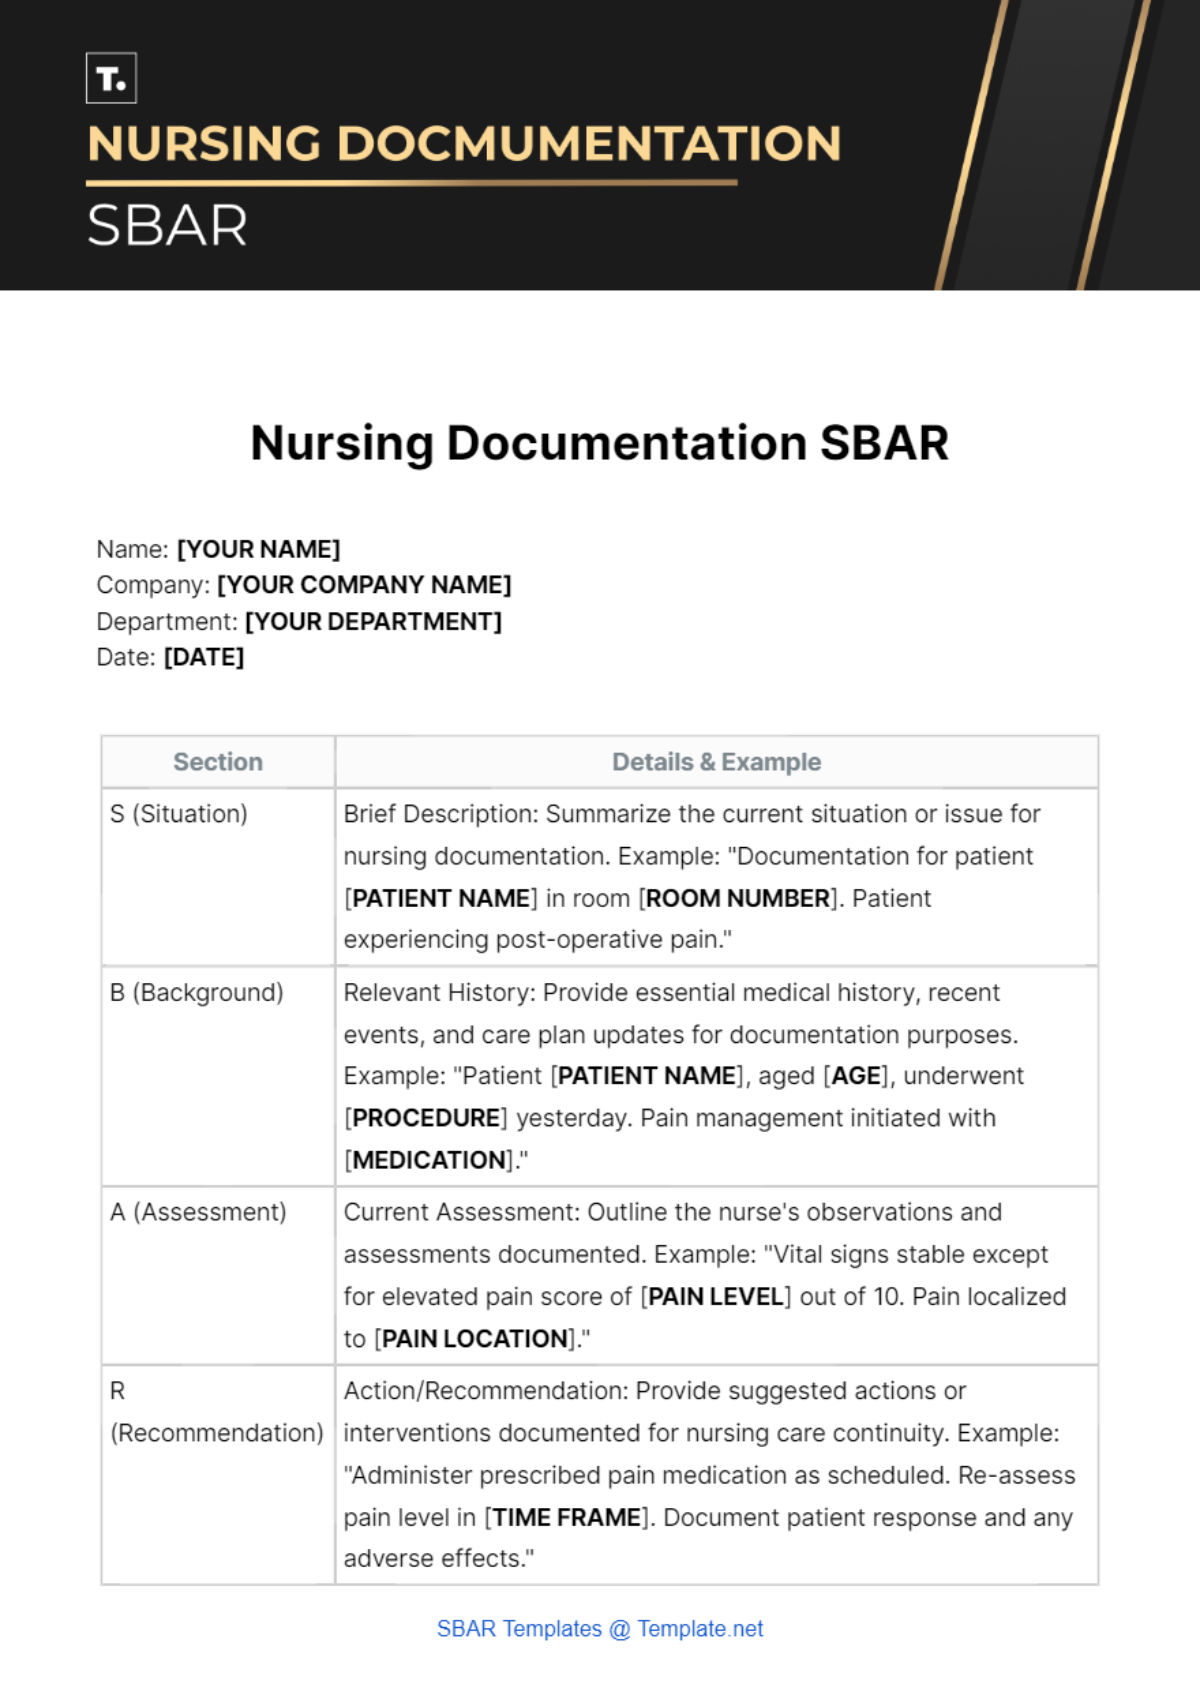 Nursing Documentation SBAR